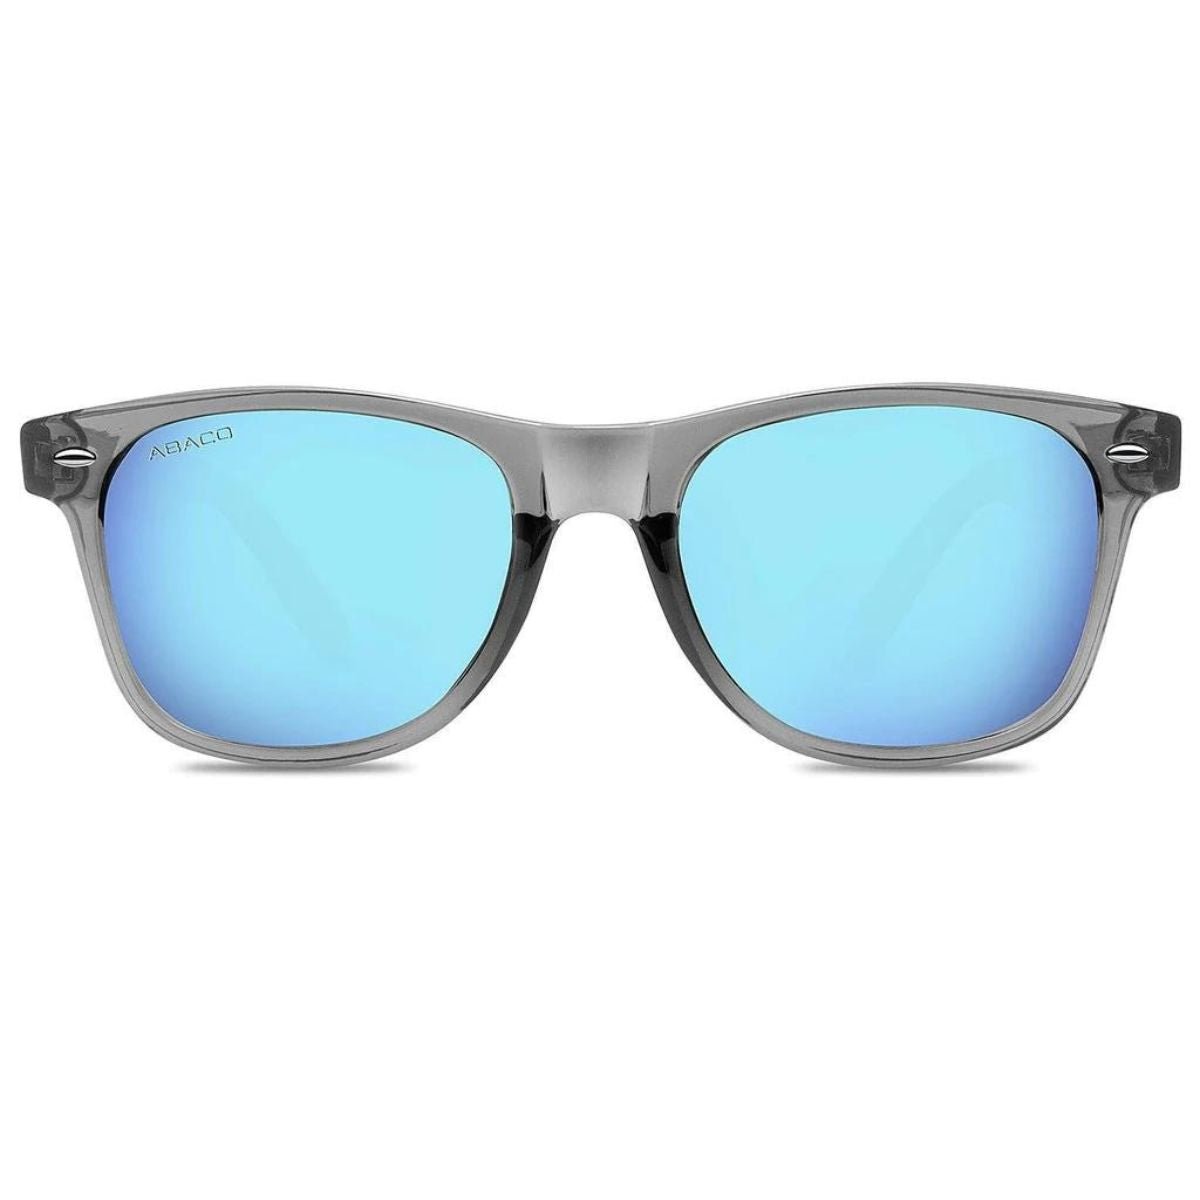 Abaco Laguna Sunglasses in Crystal Grey/Caribbean Blue - BoardCo